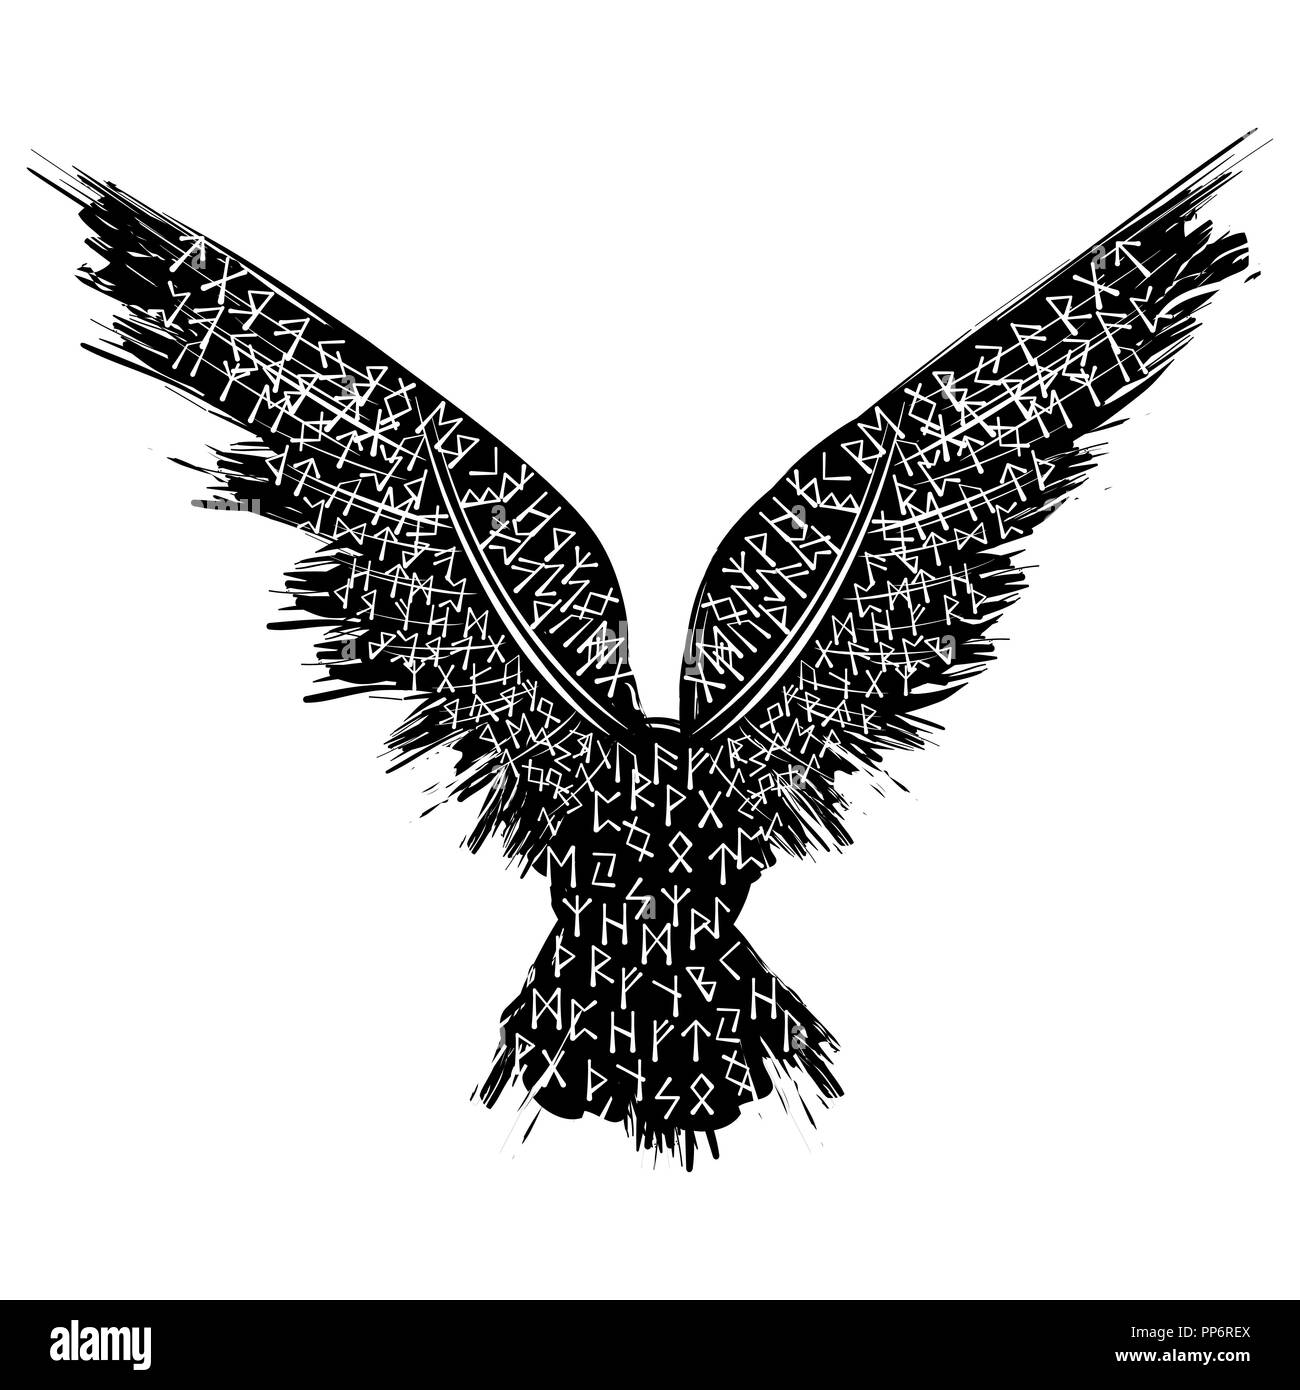 Grunge silueta negra de aves aisladas sobre fondo blanco. Ilustración del Vector